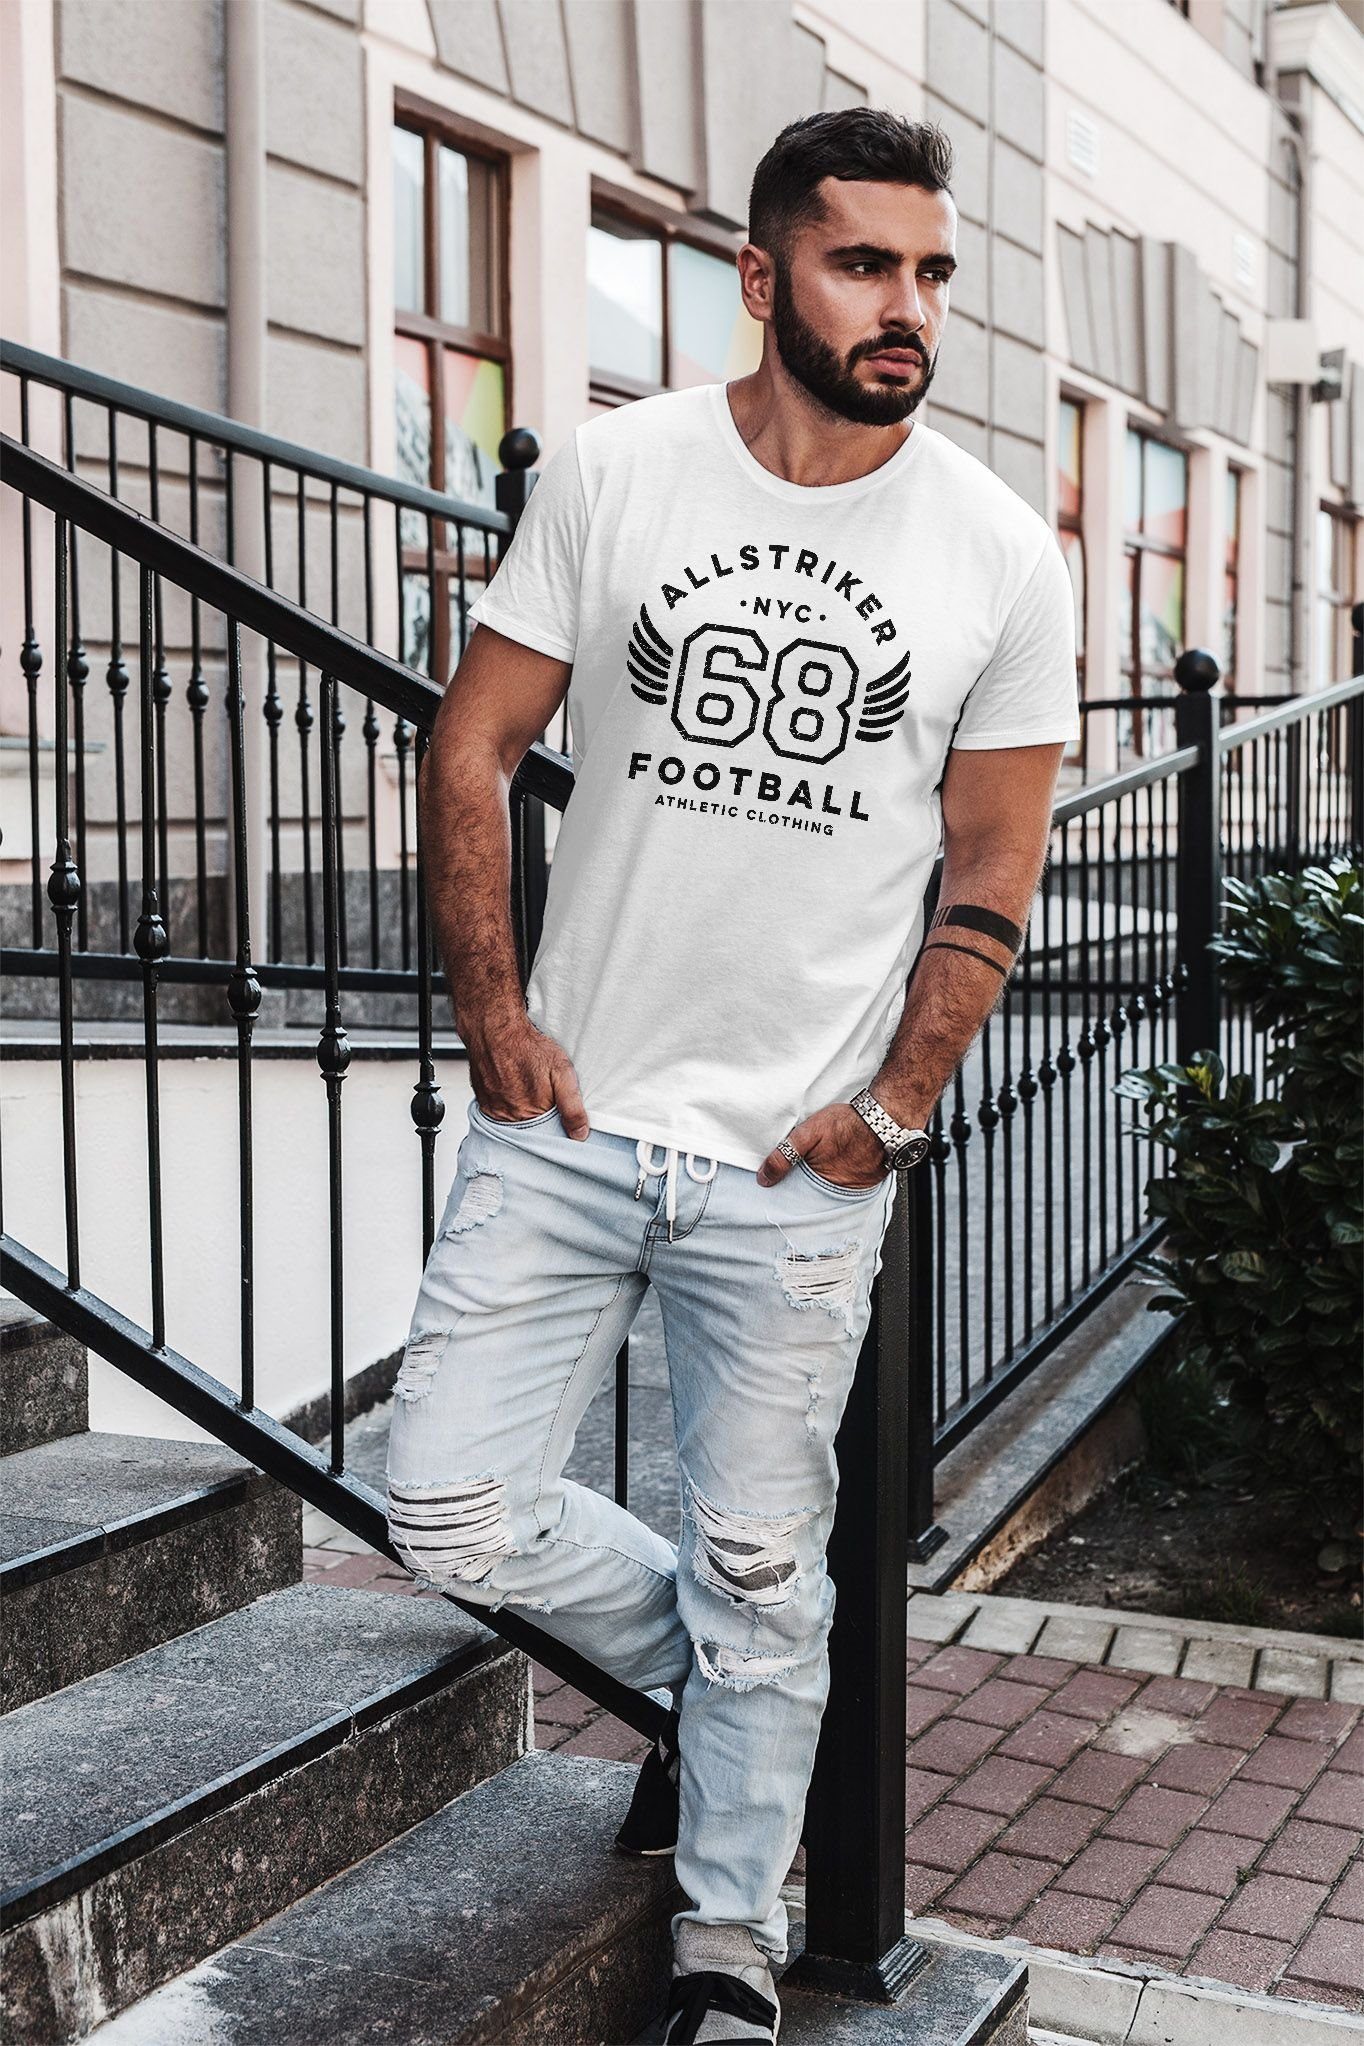 Neverless Print-Shirt Herren Print Design mit Football T-Shirt NYC Athletic Neverless® Clothing College Streetstyle 68 Fashion Schriftzug weiß Vintage